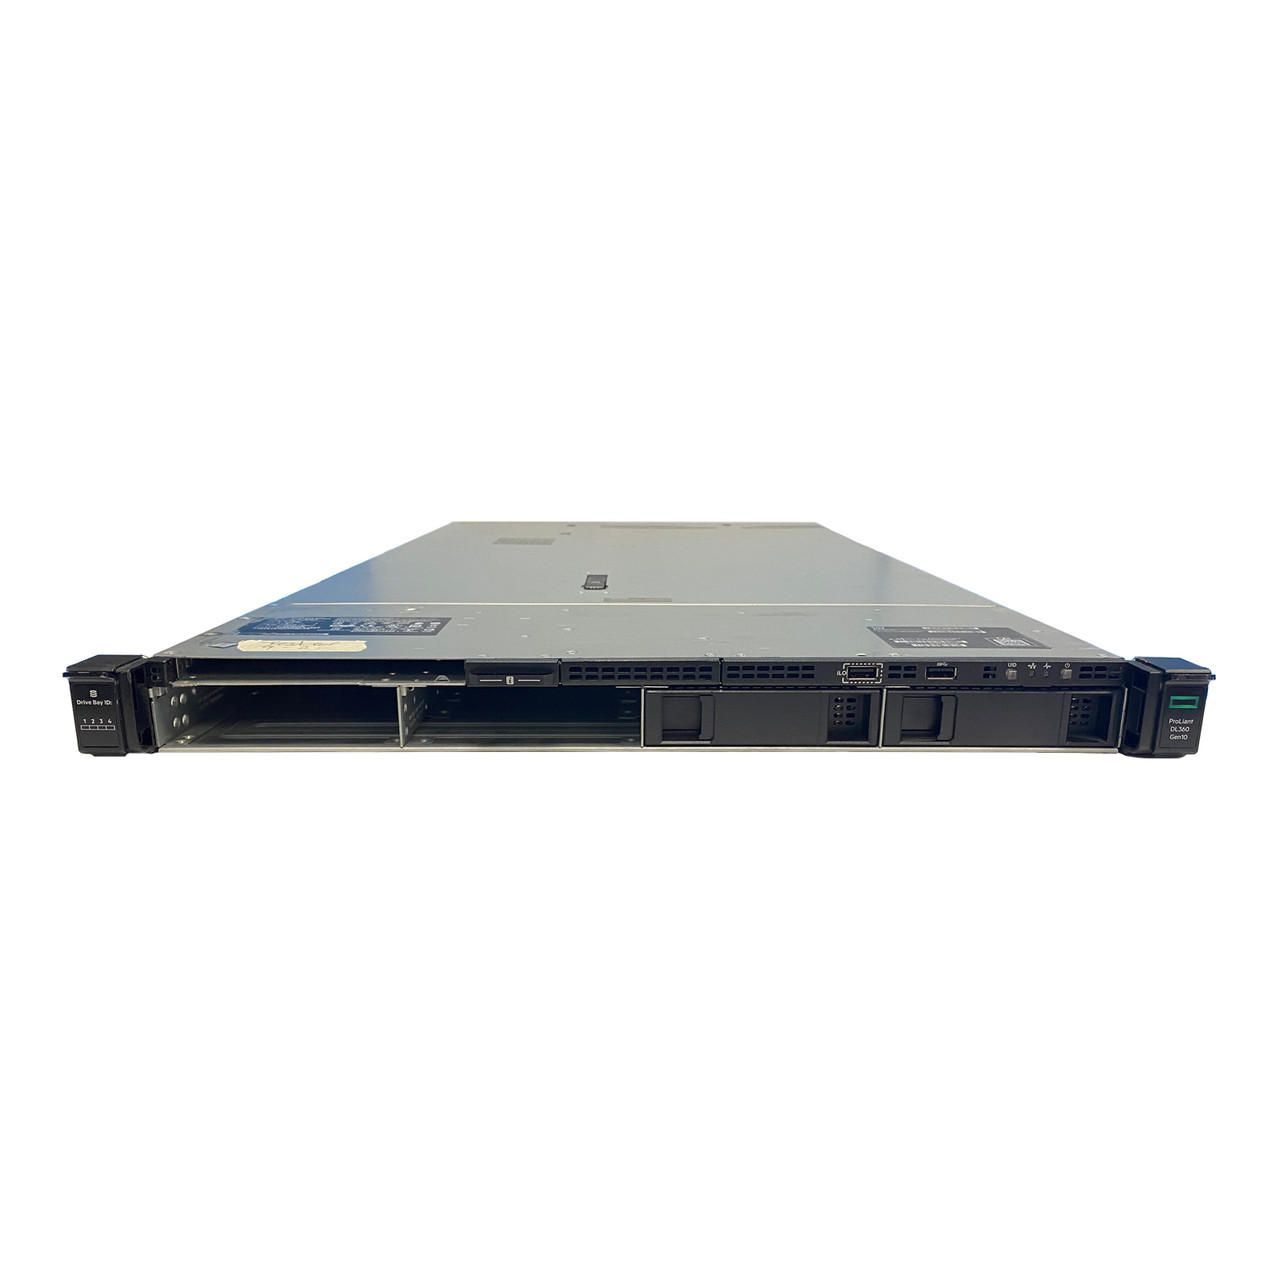 Refurbished HPe DL360 Gen10 LFF CTO 0x0 Server 867958-B21